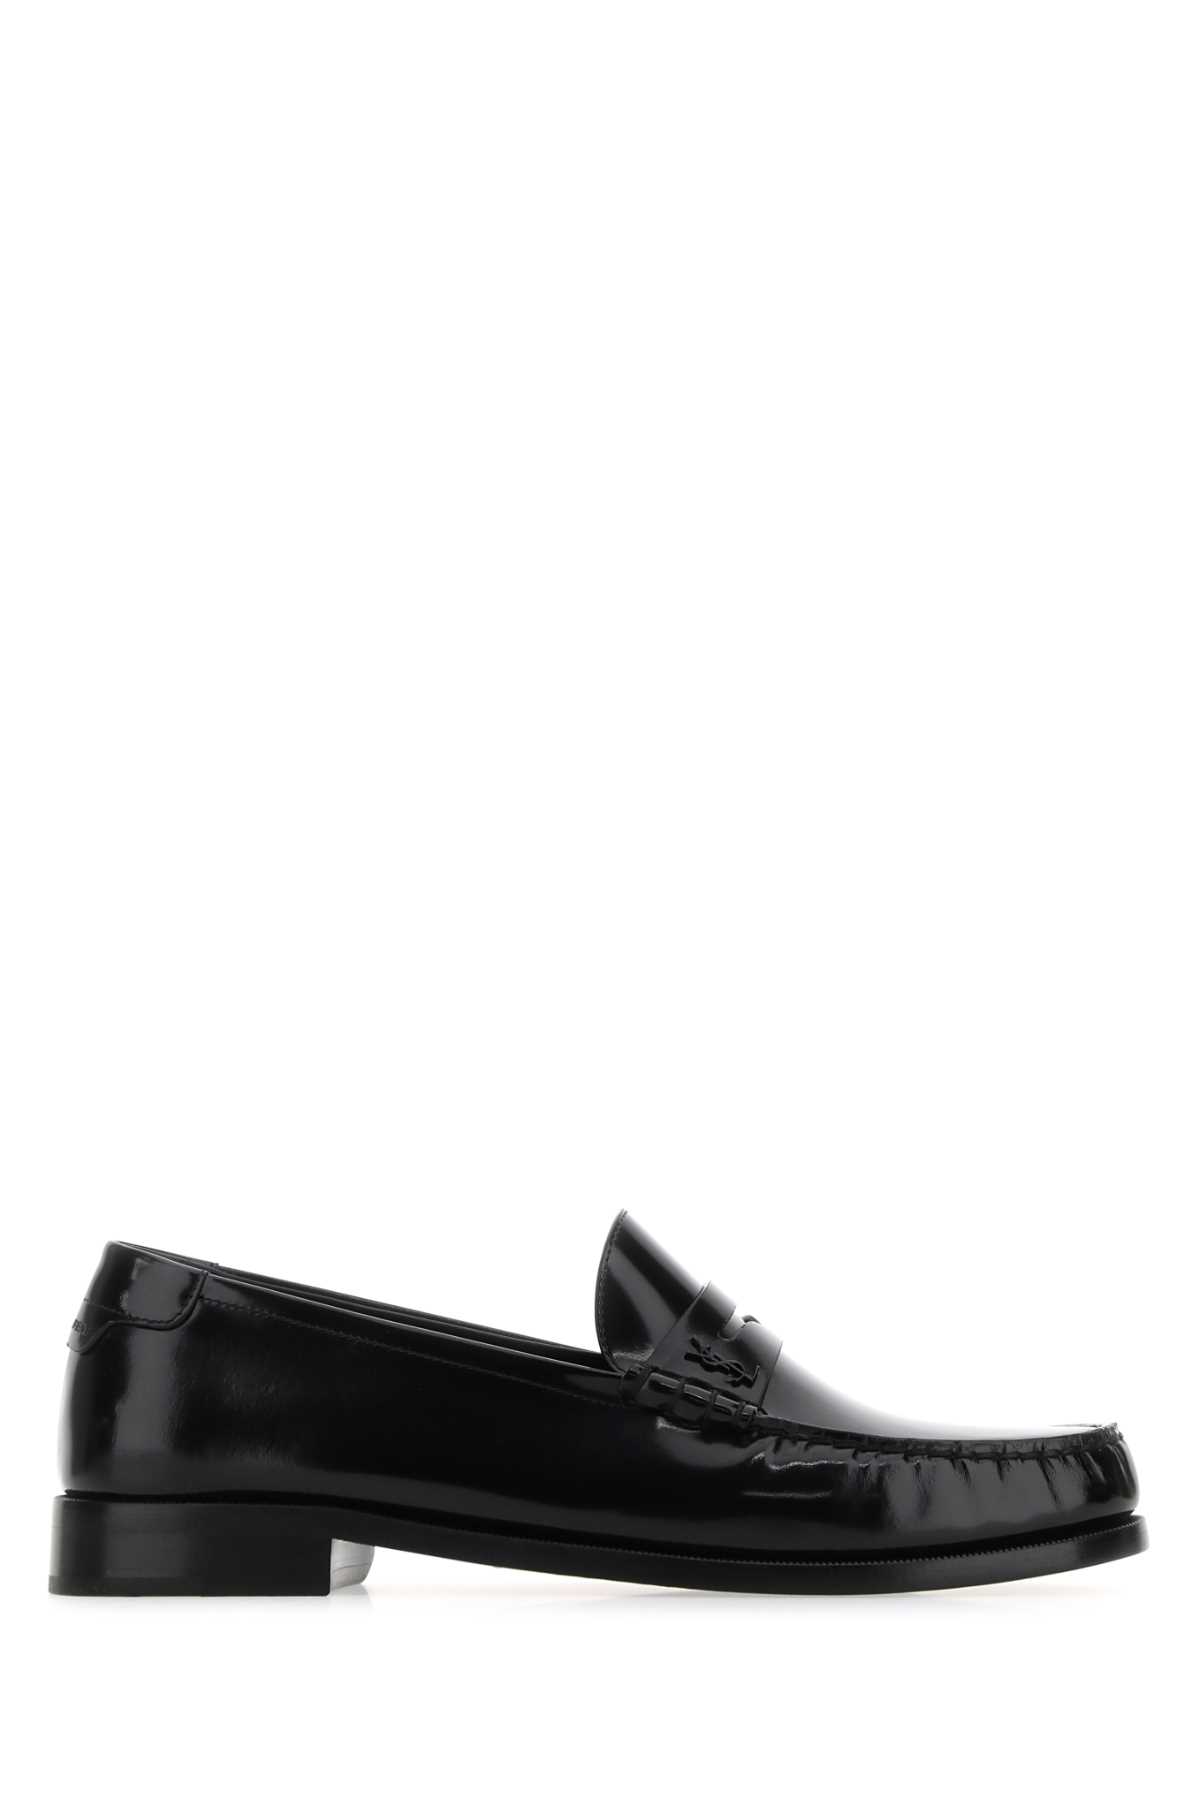 Saint Laurent Black Leather Magnum Loafers